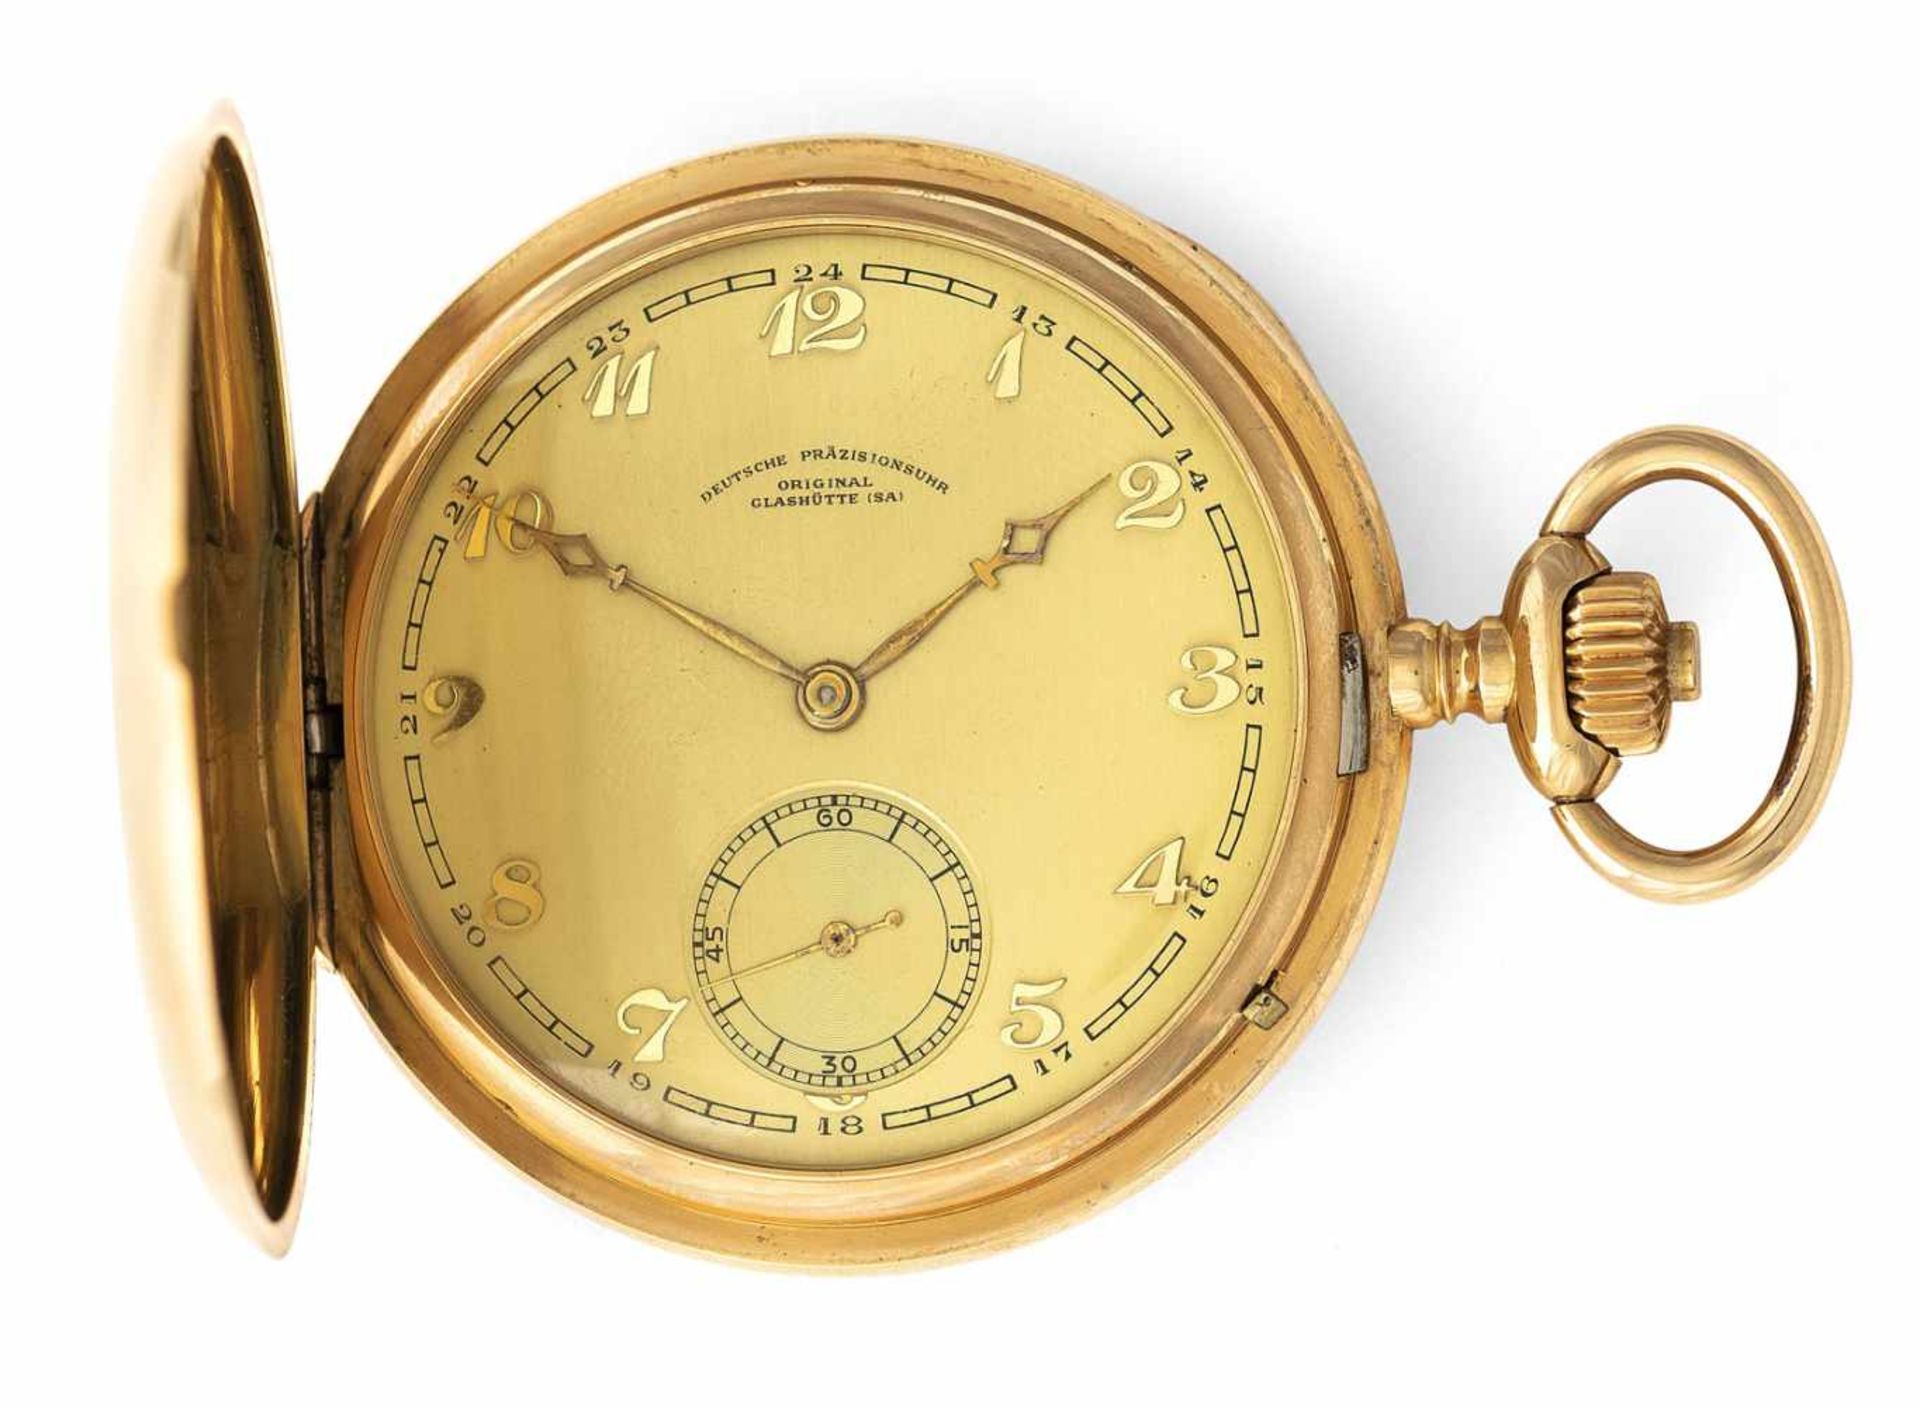 A gold pocket watch, signed Deutsche Präzisionsuhr Original Glashütte (SA), c. 1925. Gilt dial